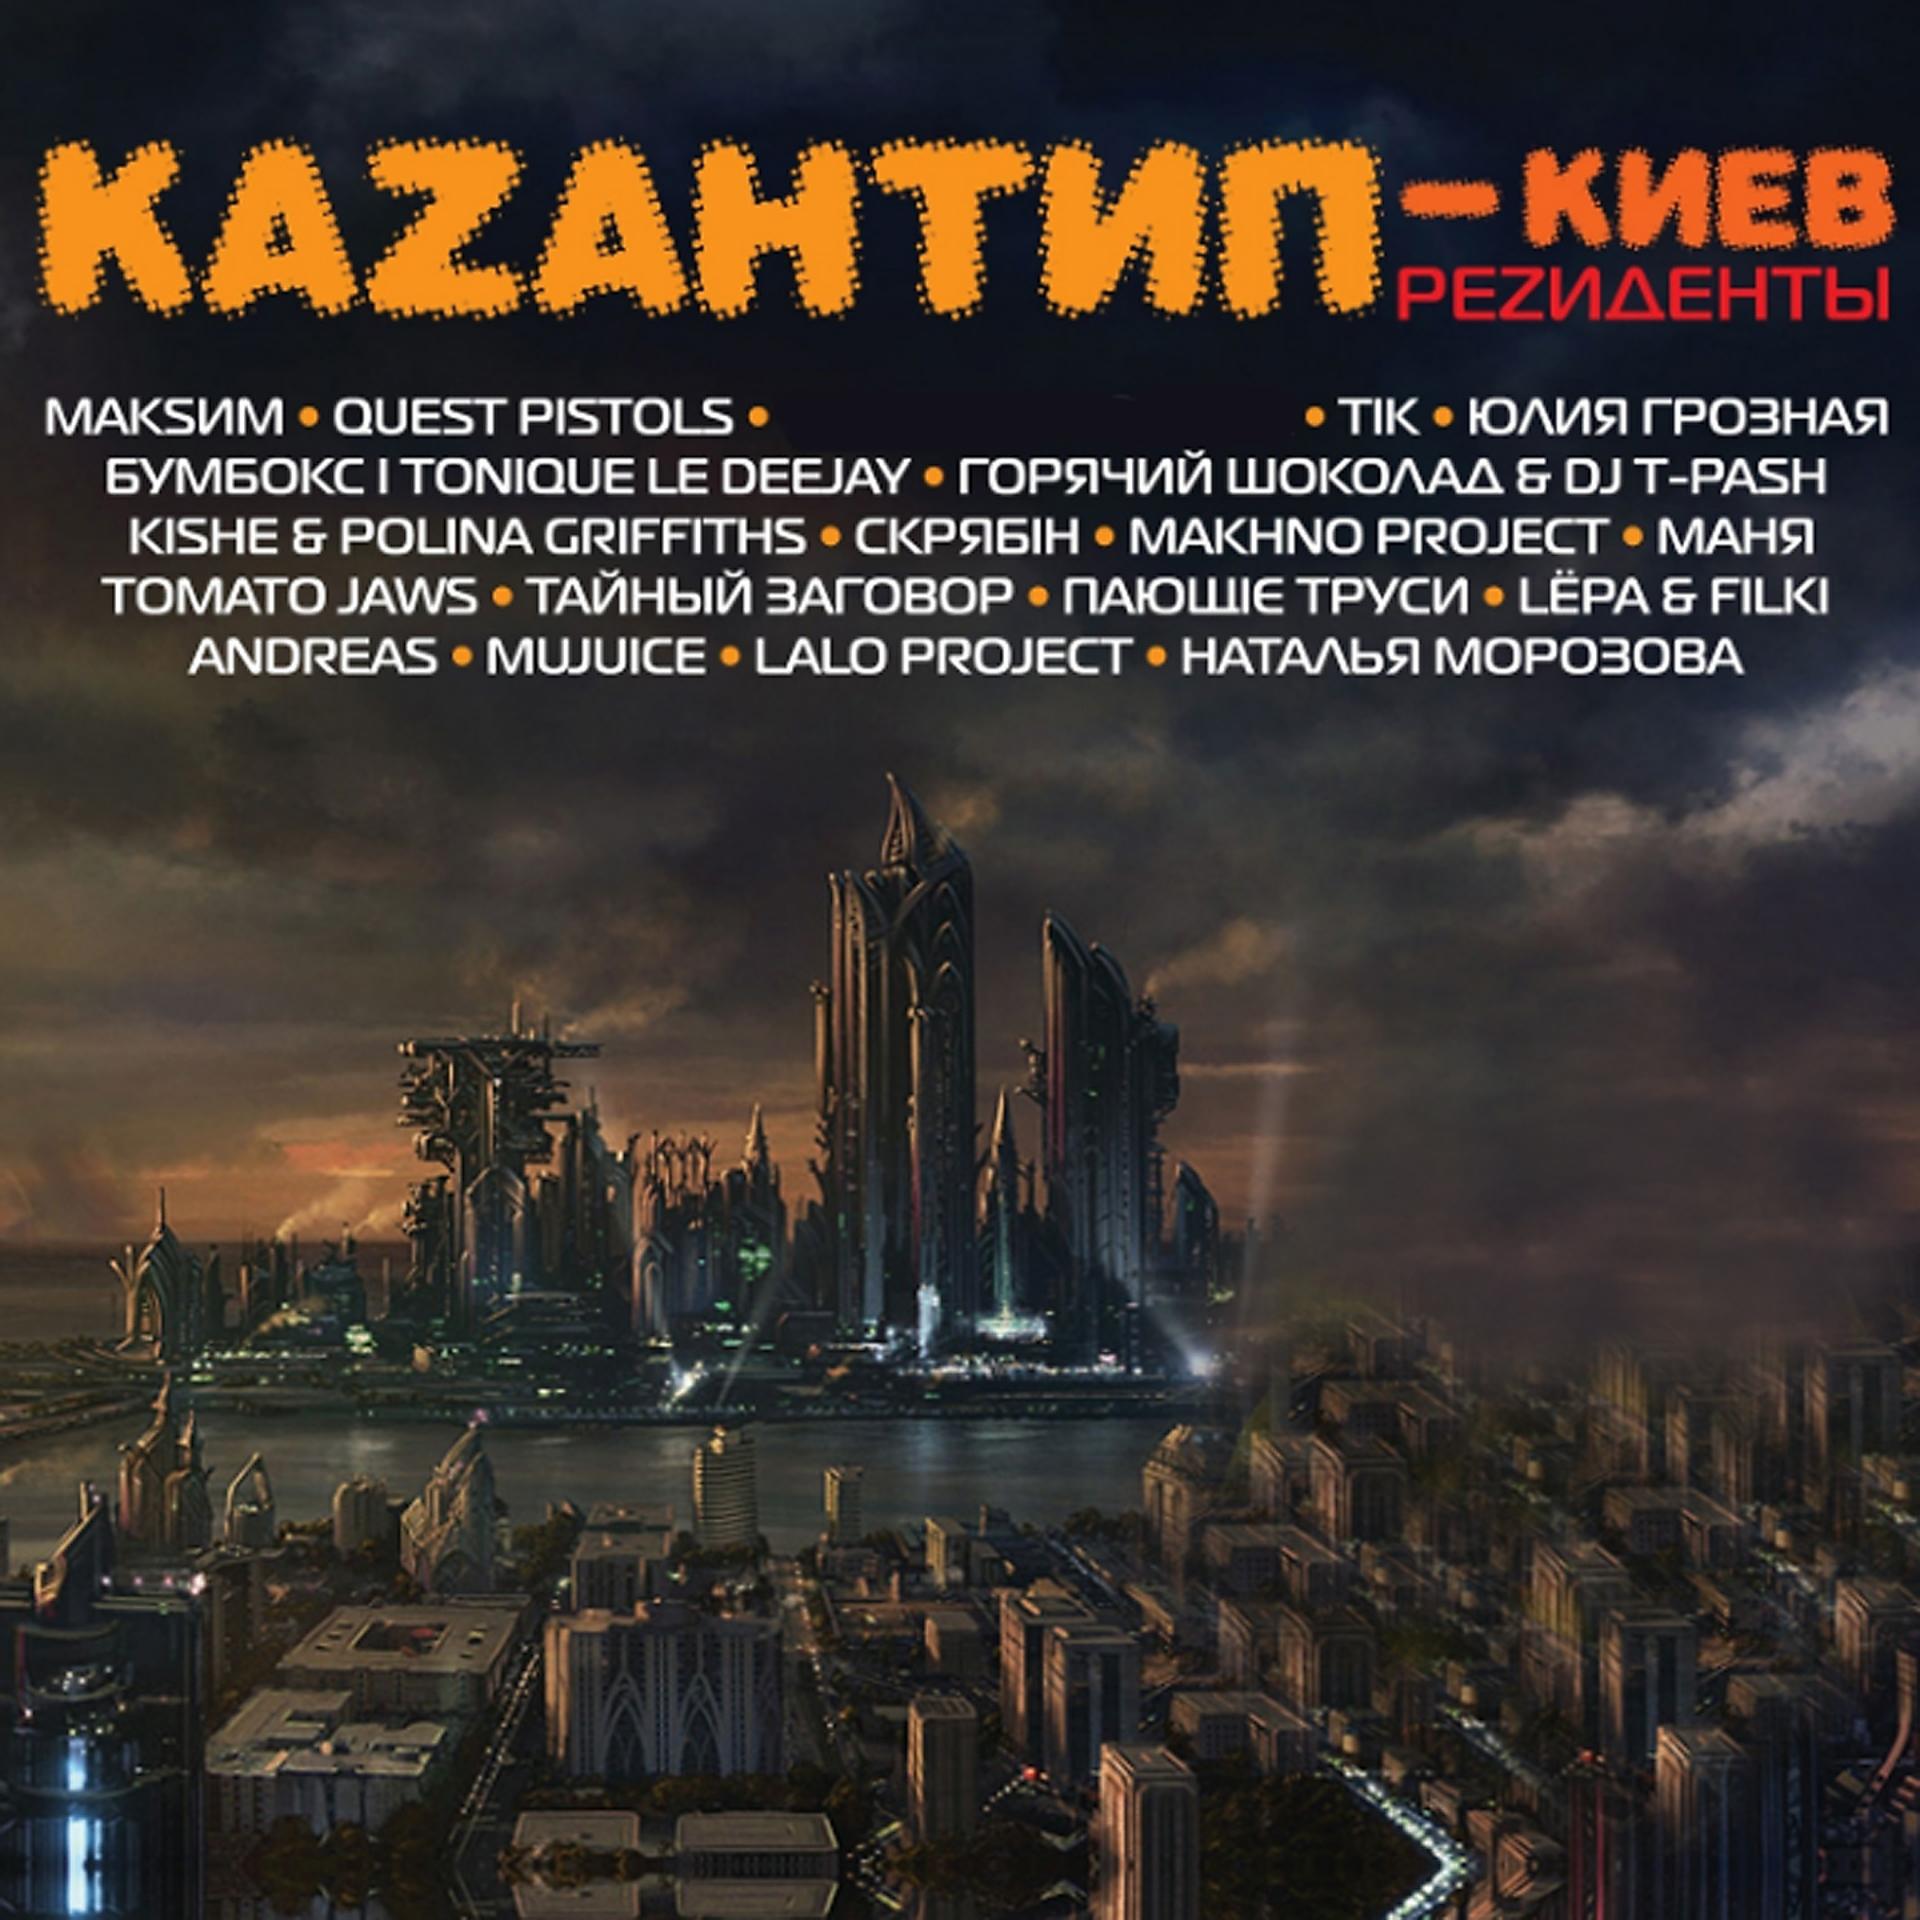 Постер к треку Makhno Project - Дотянуться до звёзд (Big Room Basic Version)